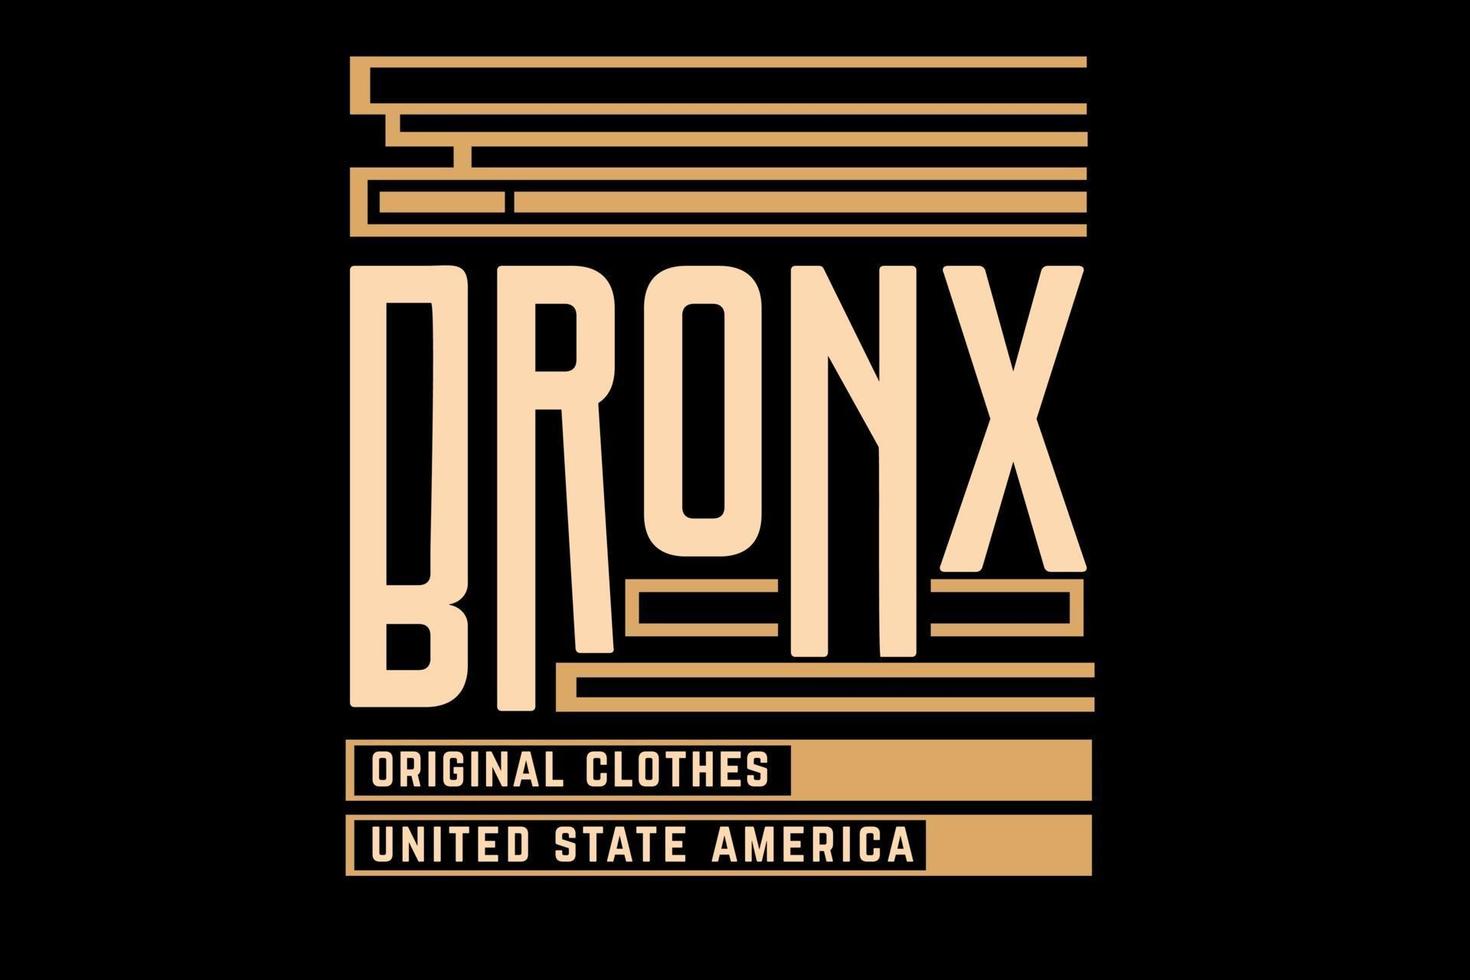 bronx original clothes typography design vector